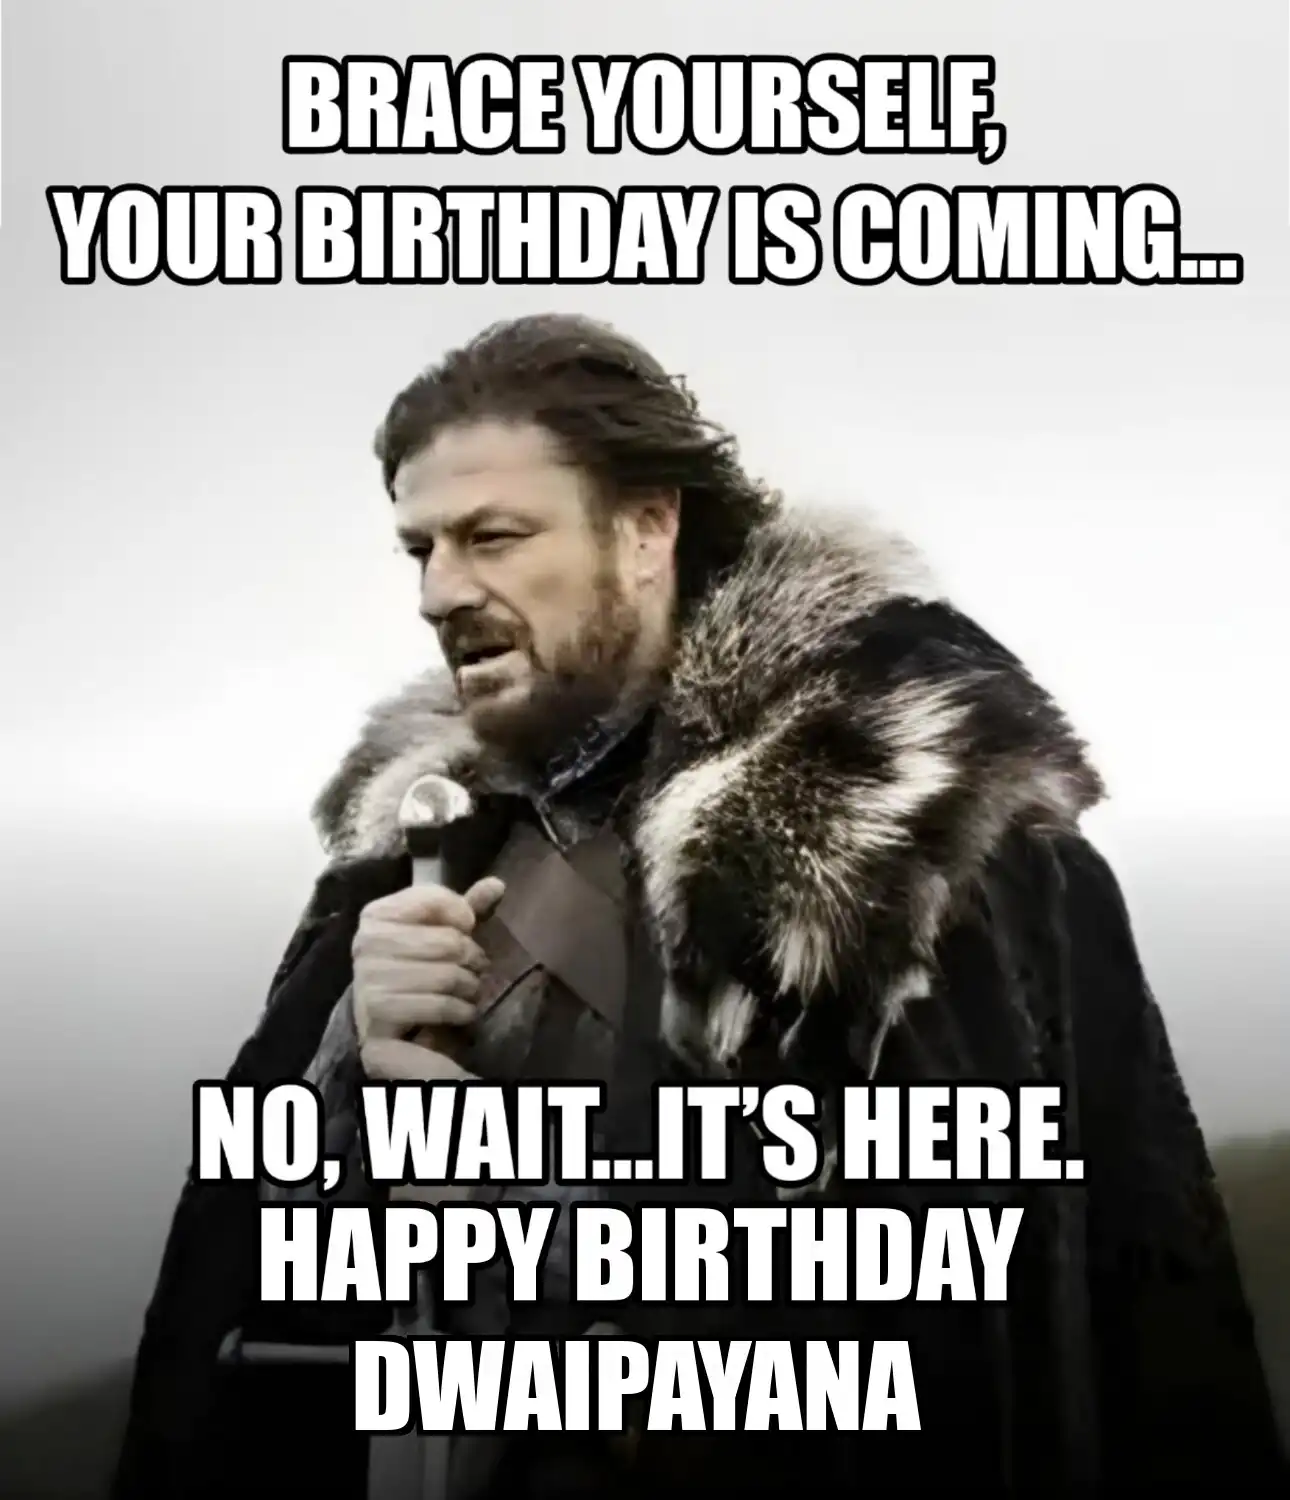 Happy Birthday Dwaipayana Brace Yourself Your Birthday Is Coming Meme